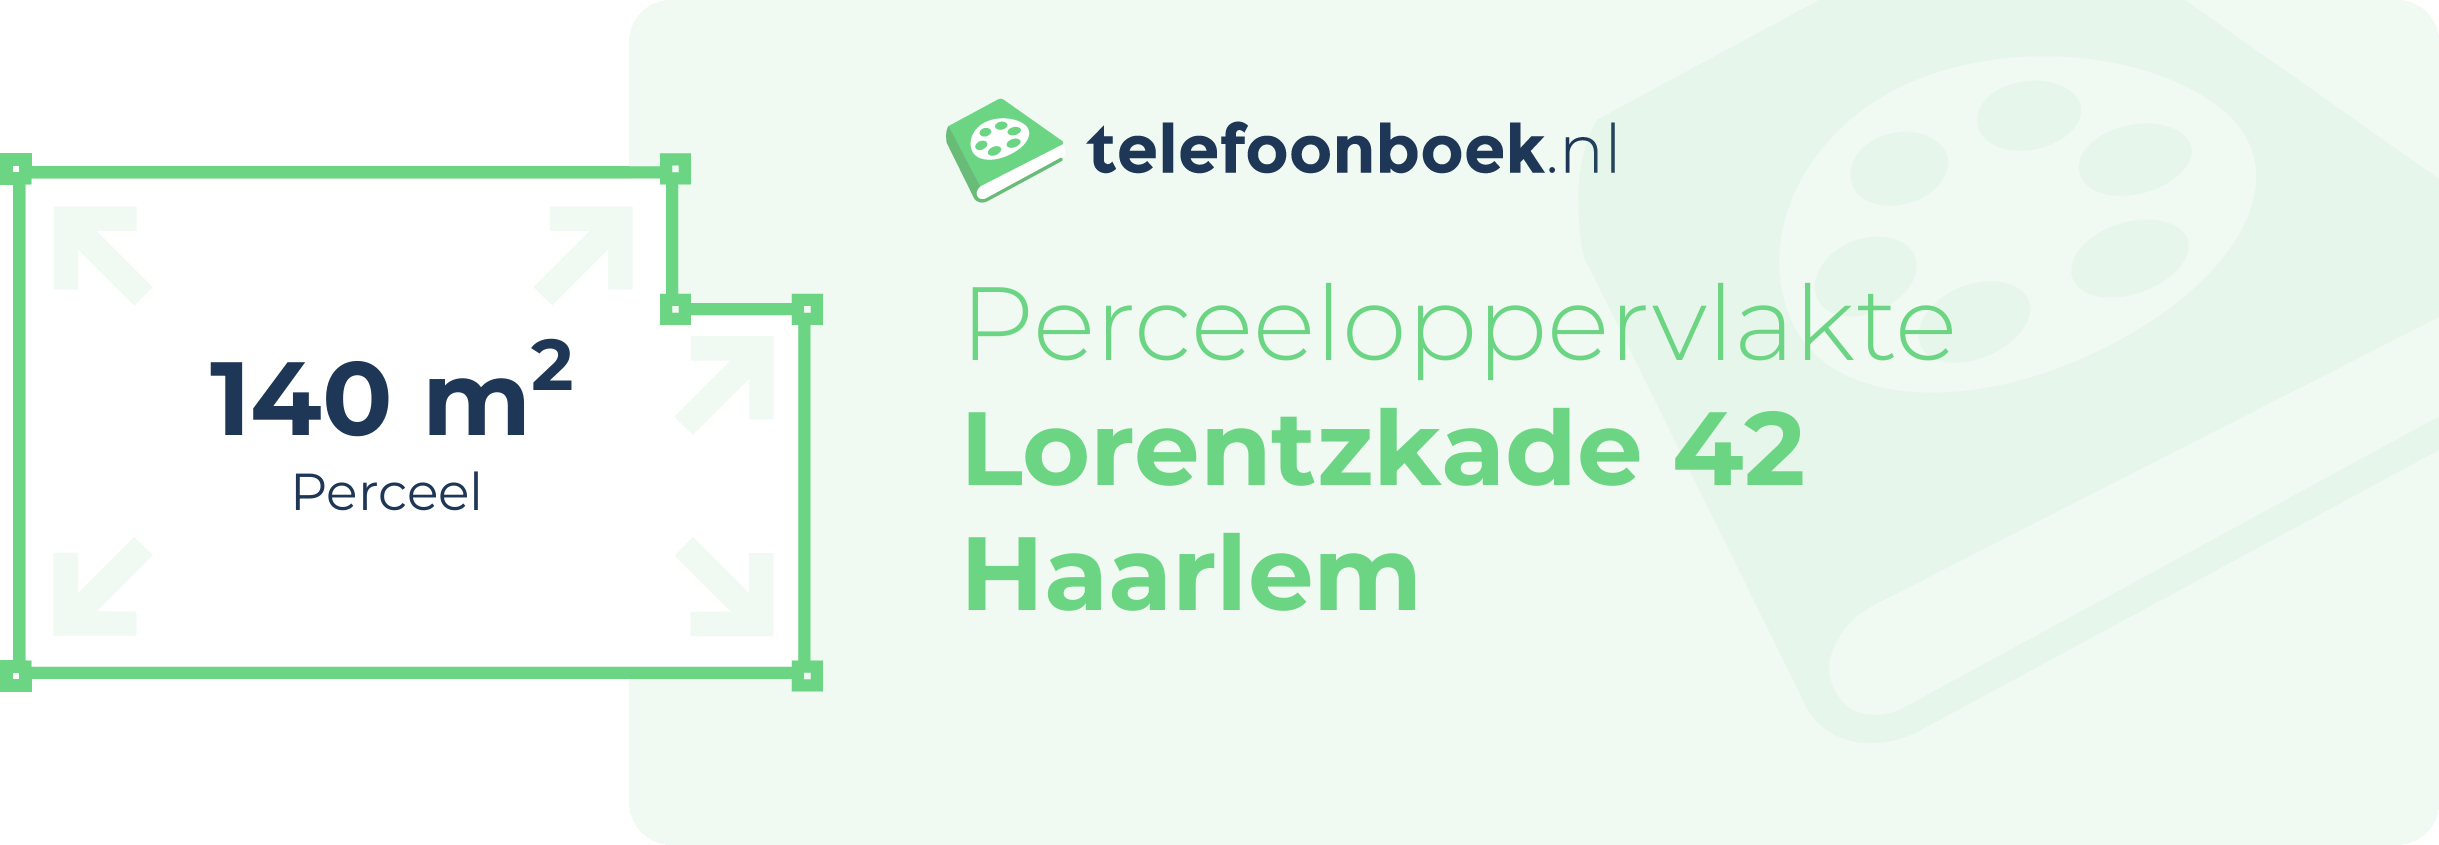 Perceeloppervlakte Lorentzkade 42 Haarlem